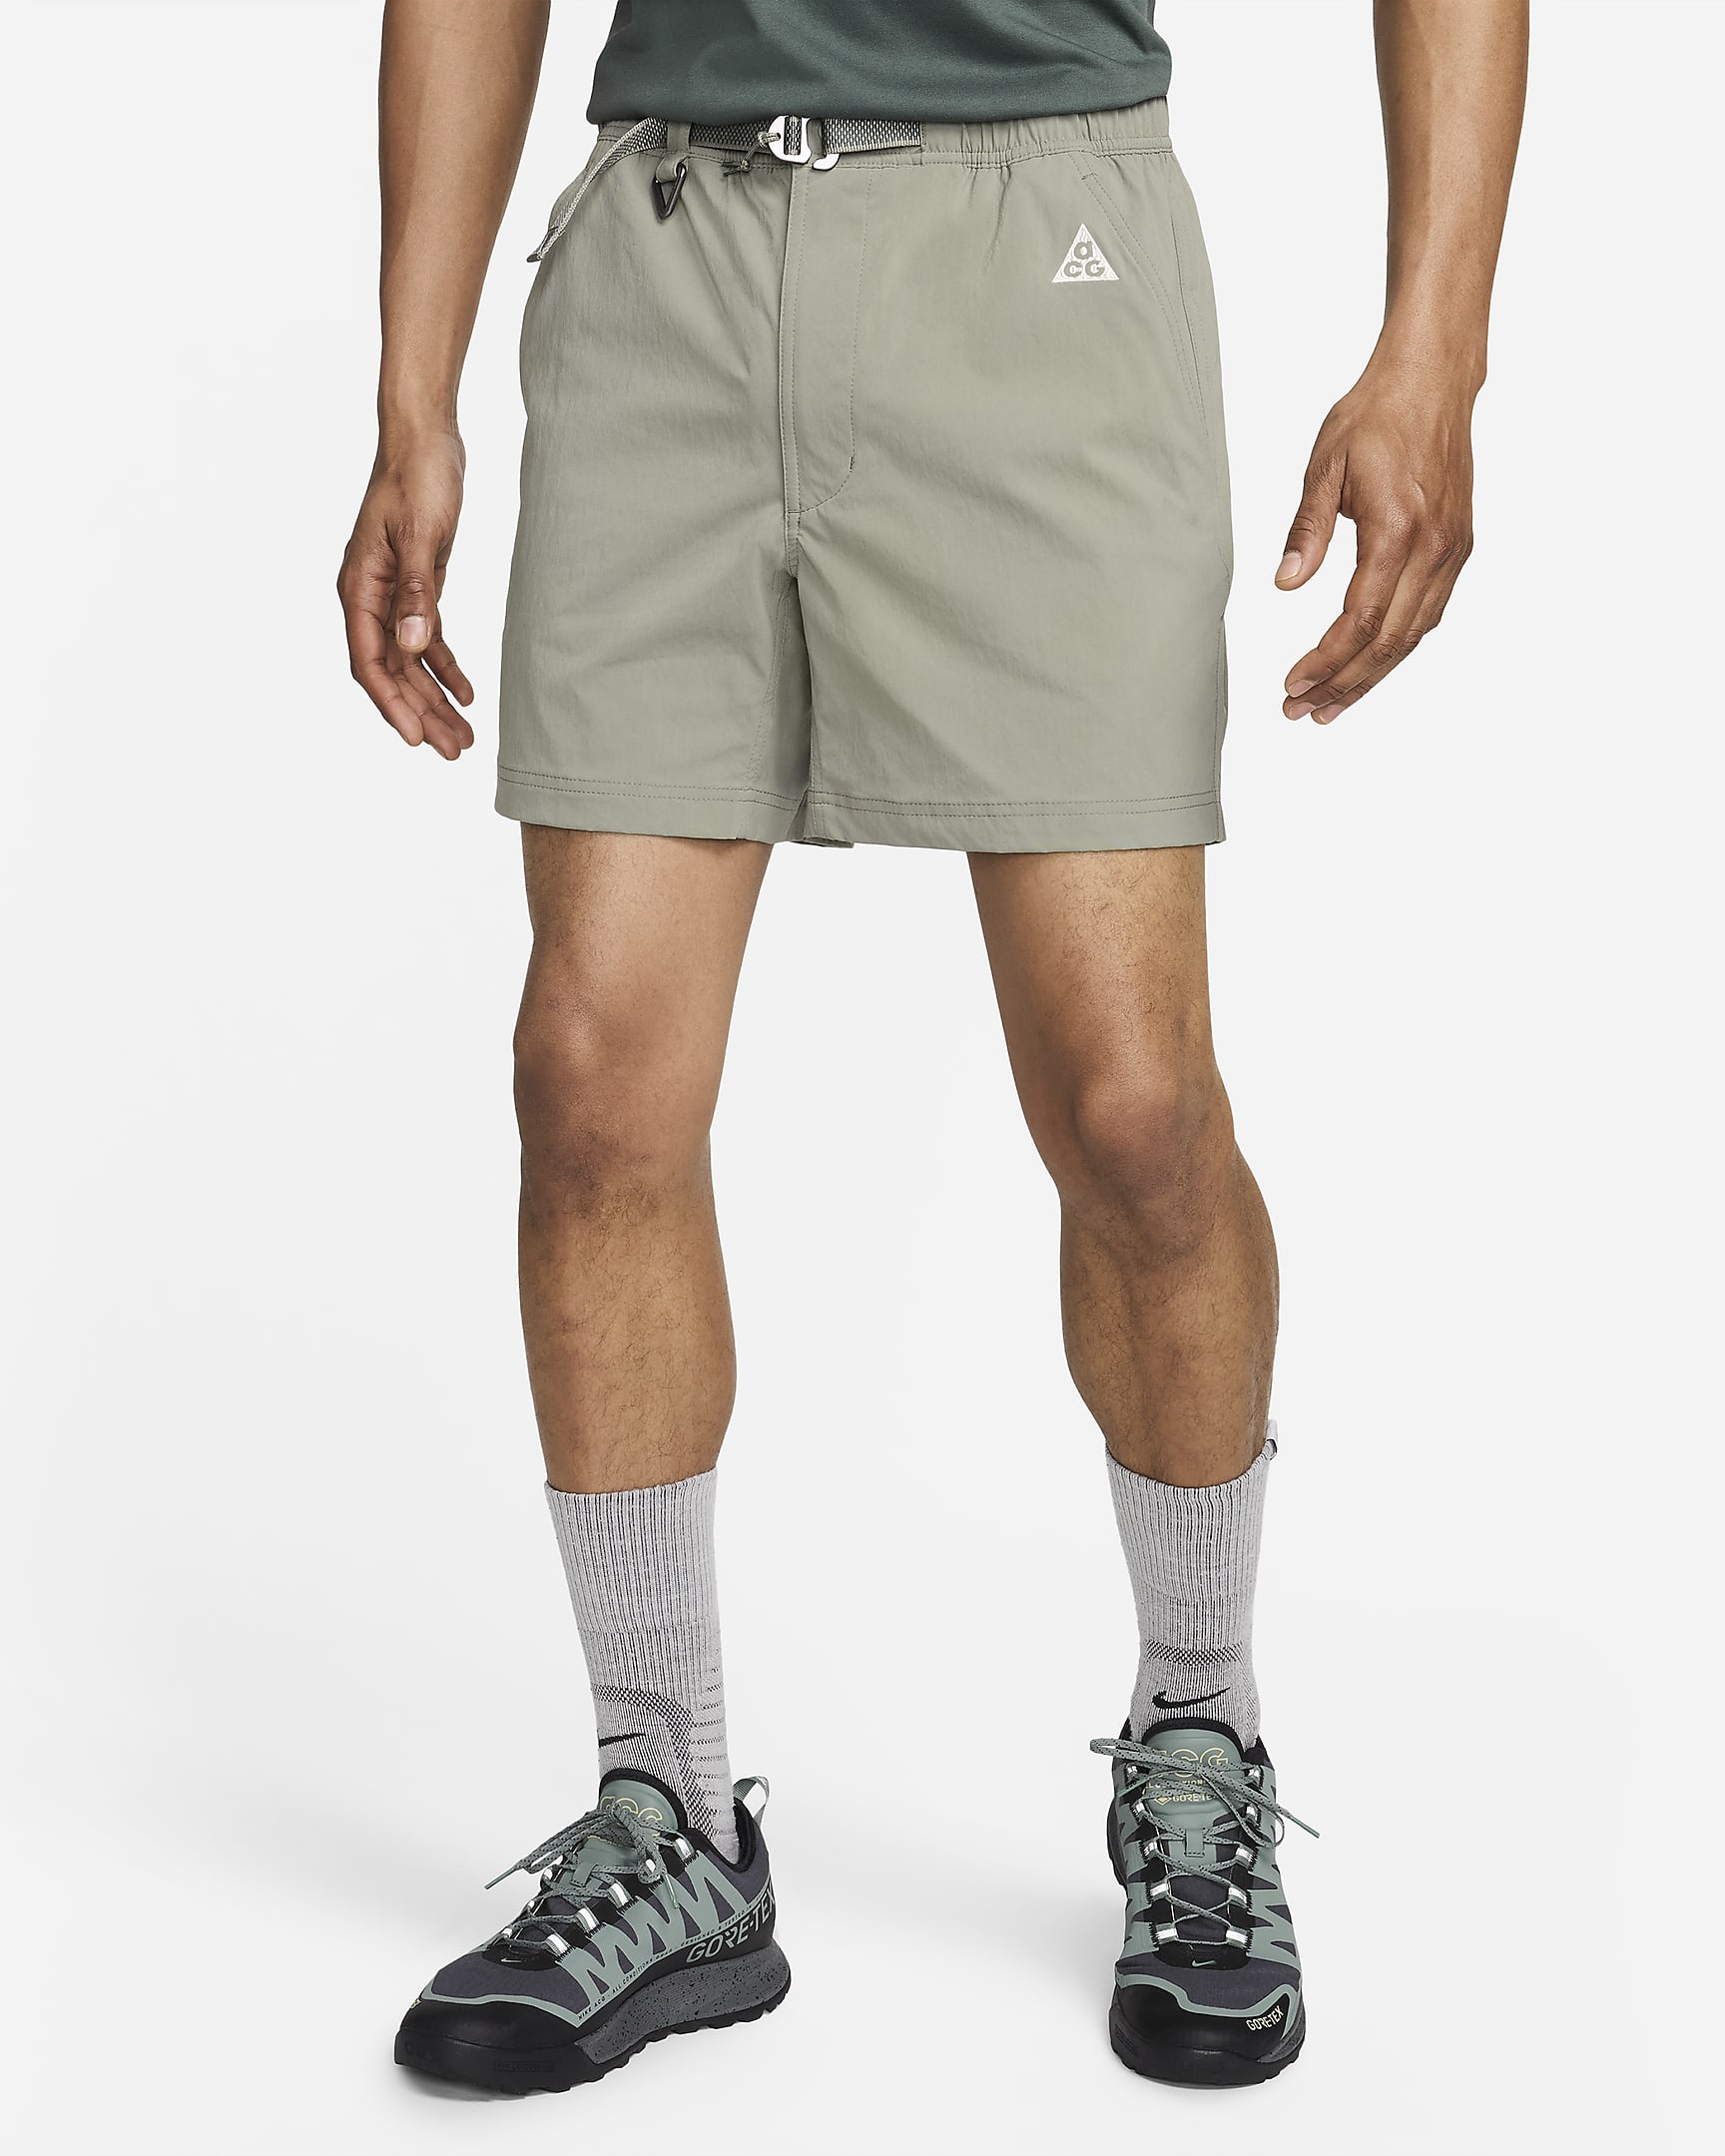 Nike ACG Men's Hiking Shorts - Dark Stucco/Summit White